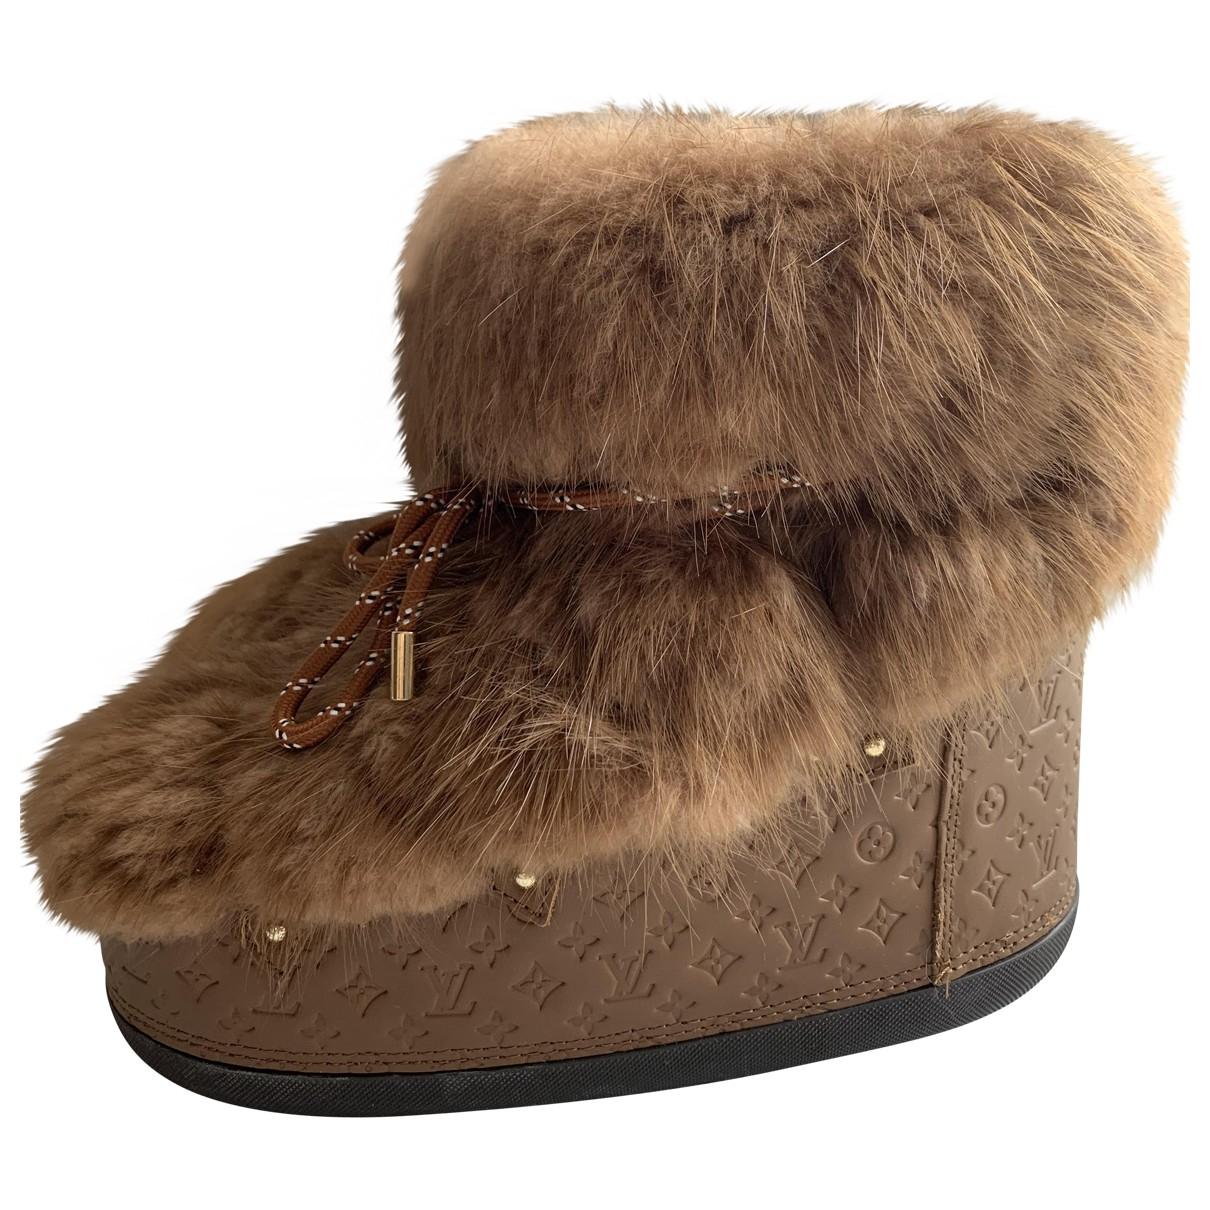 Louis Vuitton Fur Snow Boots in Brown - Lyst